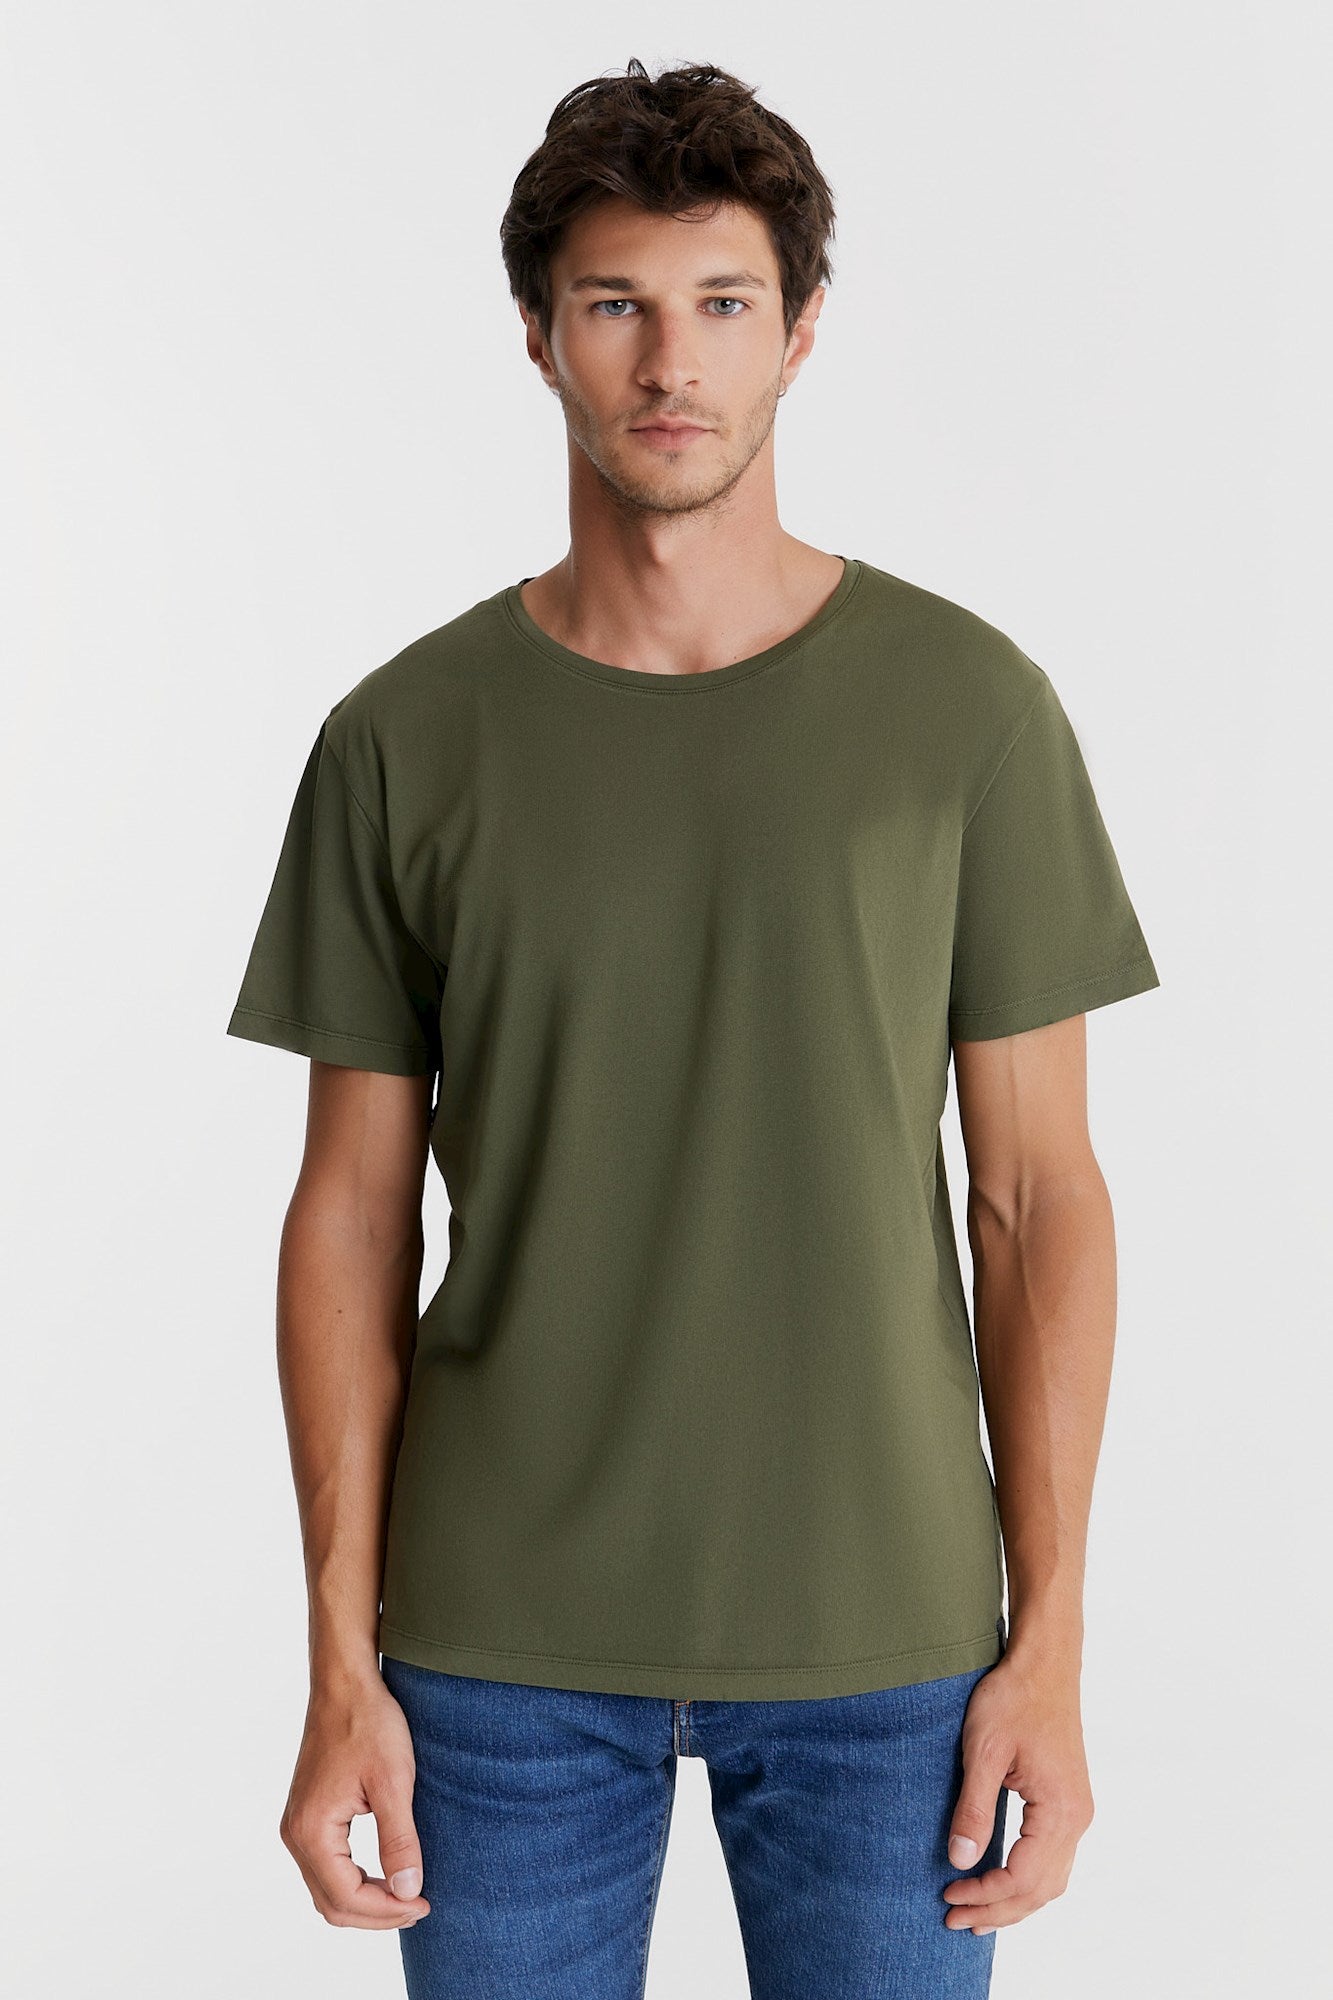 Coy - T-shirt - Khaki